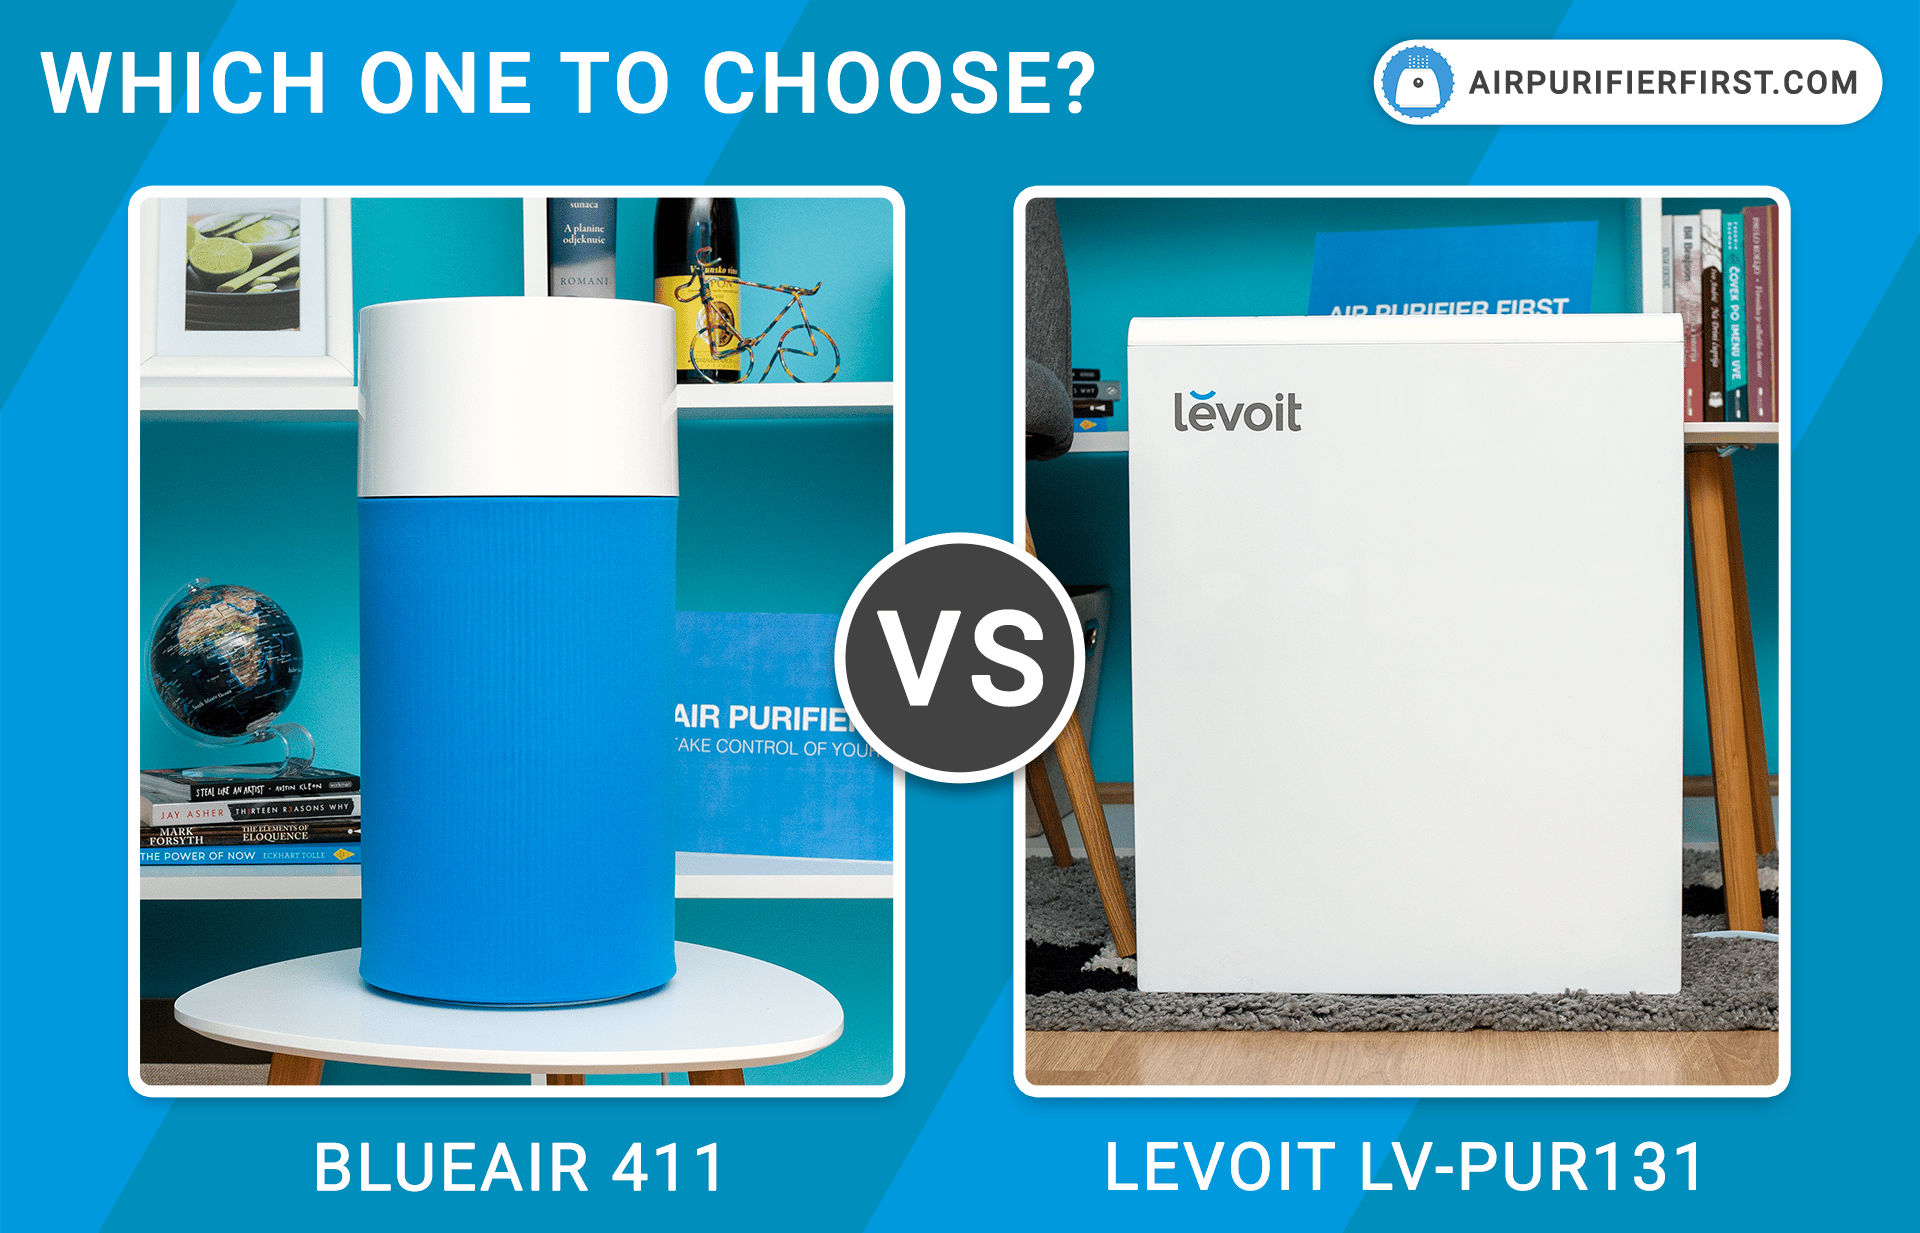 Blueair 211+ Vs Levoit LV-PUR131 - Trusted Comparison (2022) : r